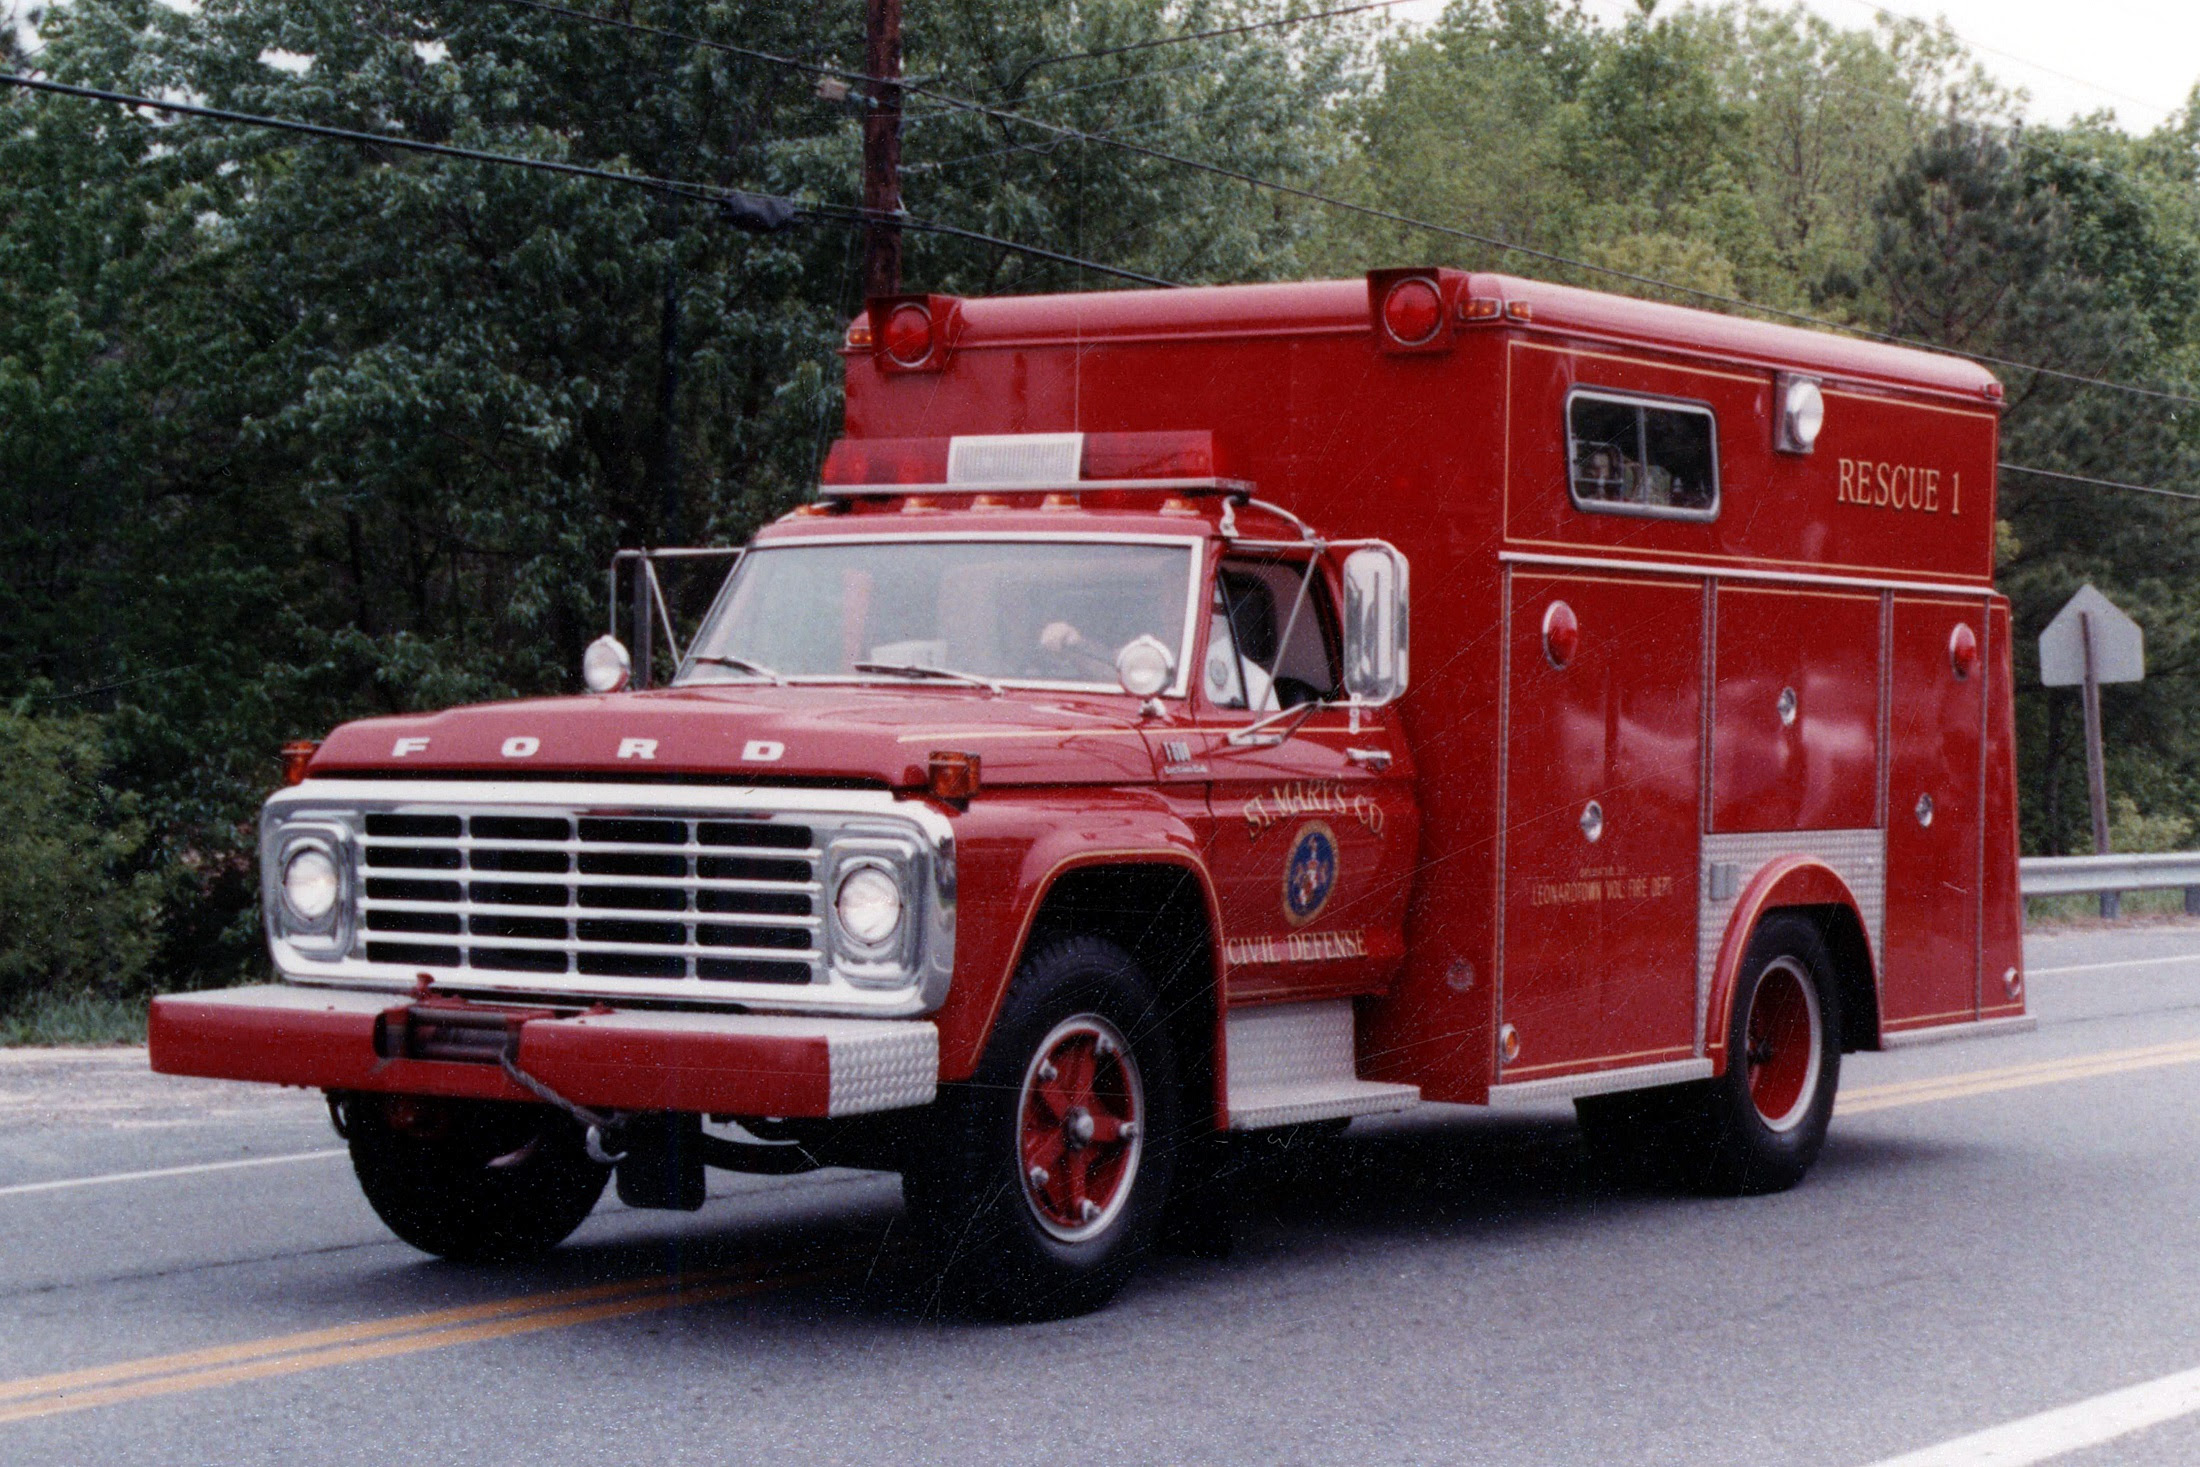 MD, Leonardtown Fire Department